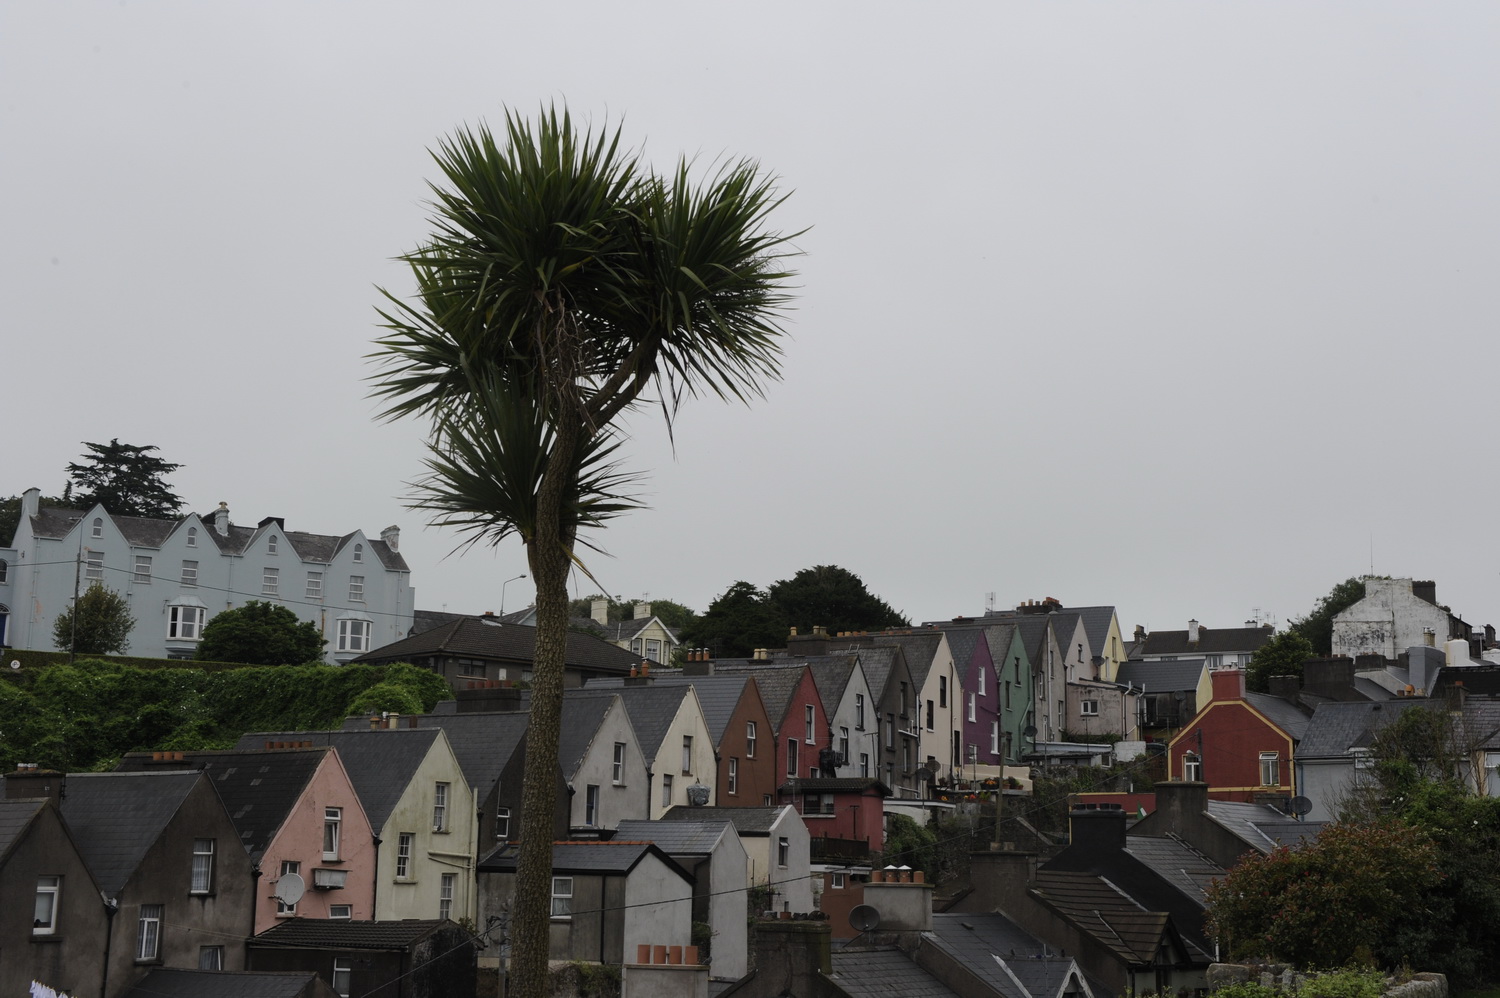 Dolph Kessler - De palmbomen van Ierland 